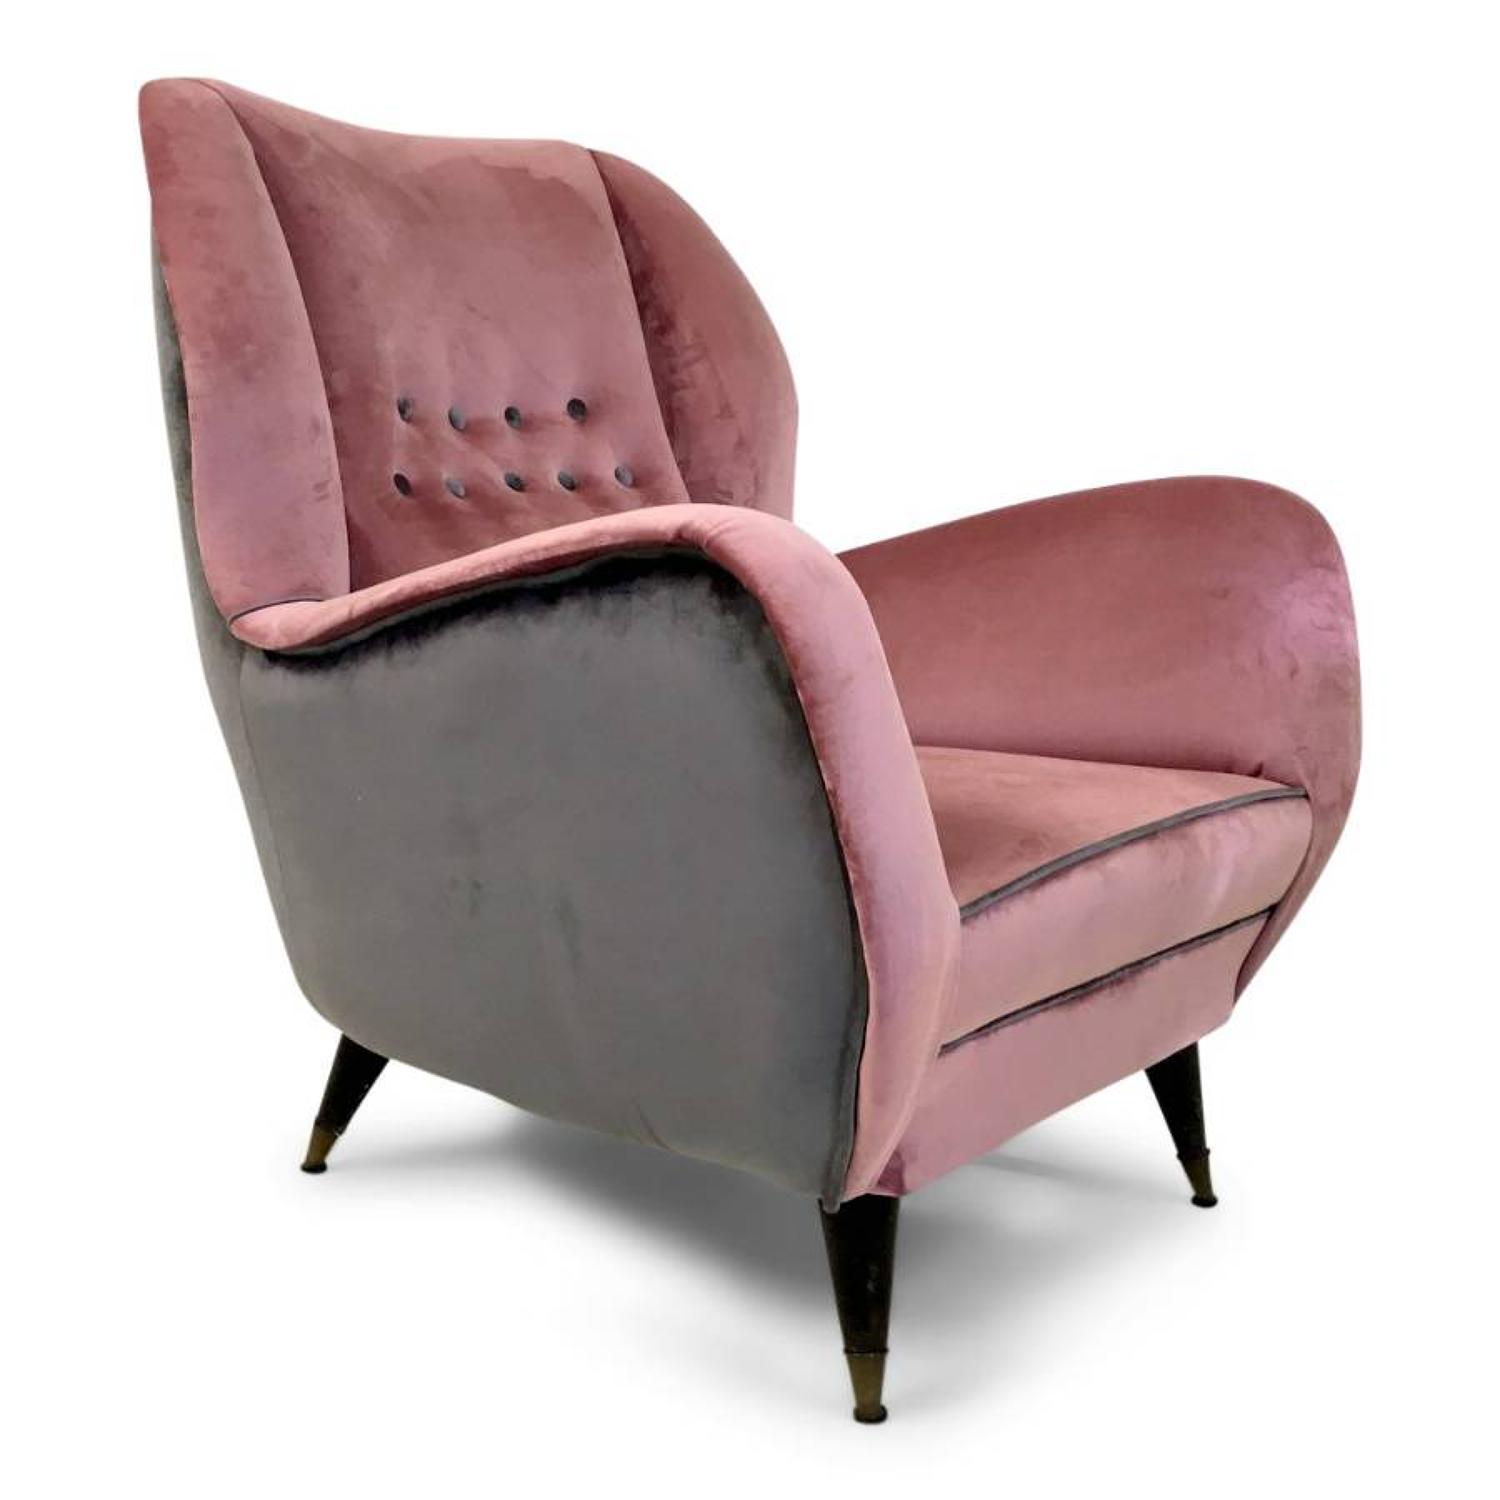 A 1950s pink and grey velvet Italian armchair